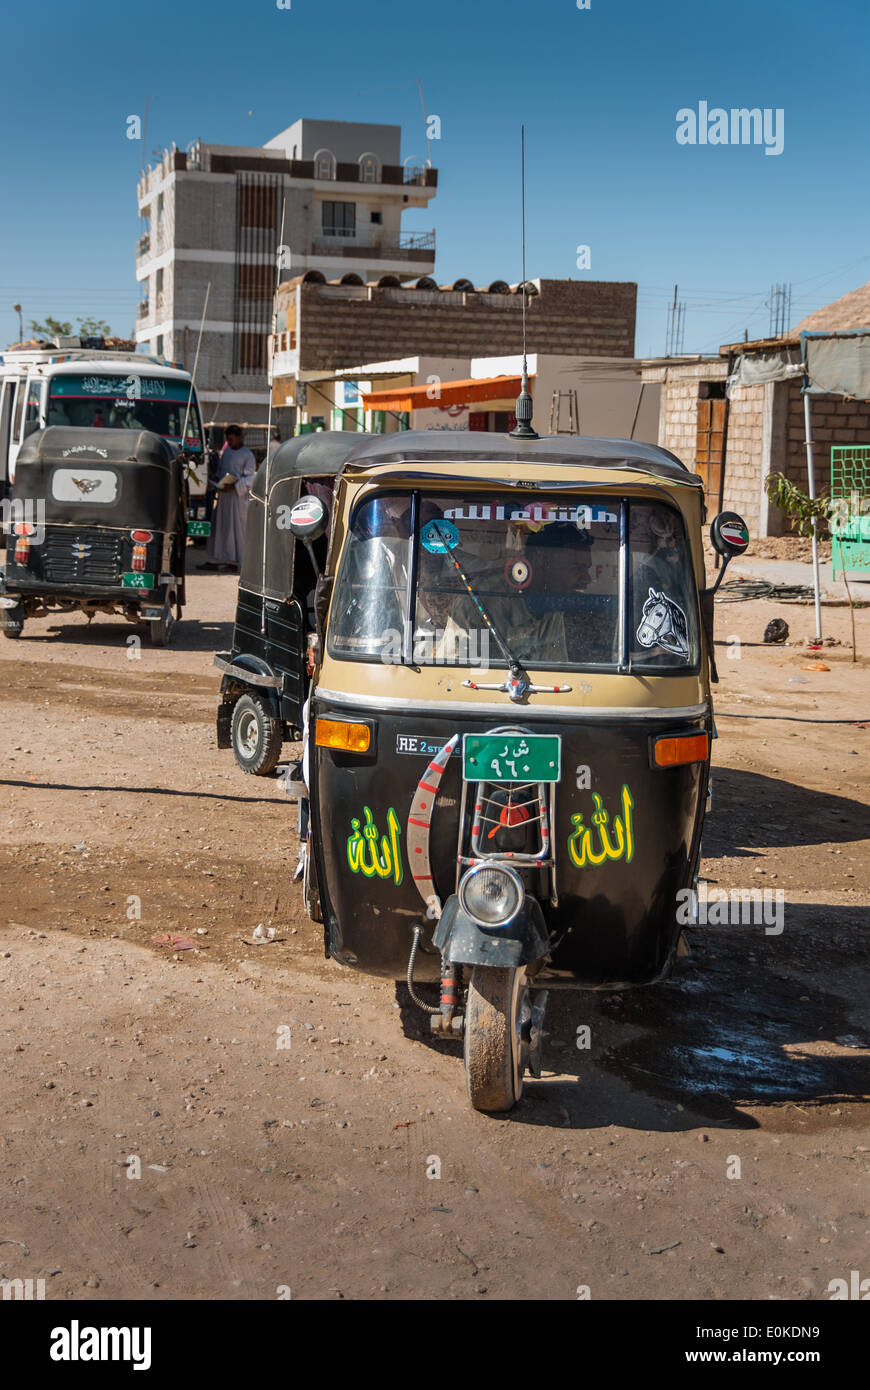 Auto Rickshaw (tuk-tuk) at the street of Wadi Halfa, northern Sudan Stock Photo